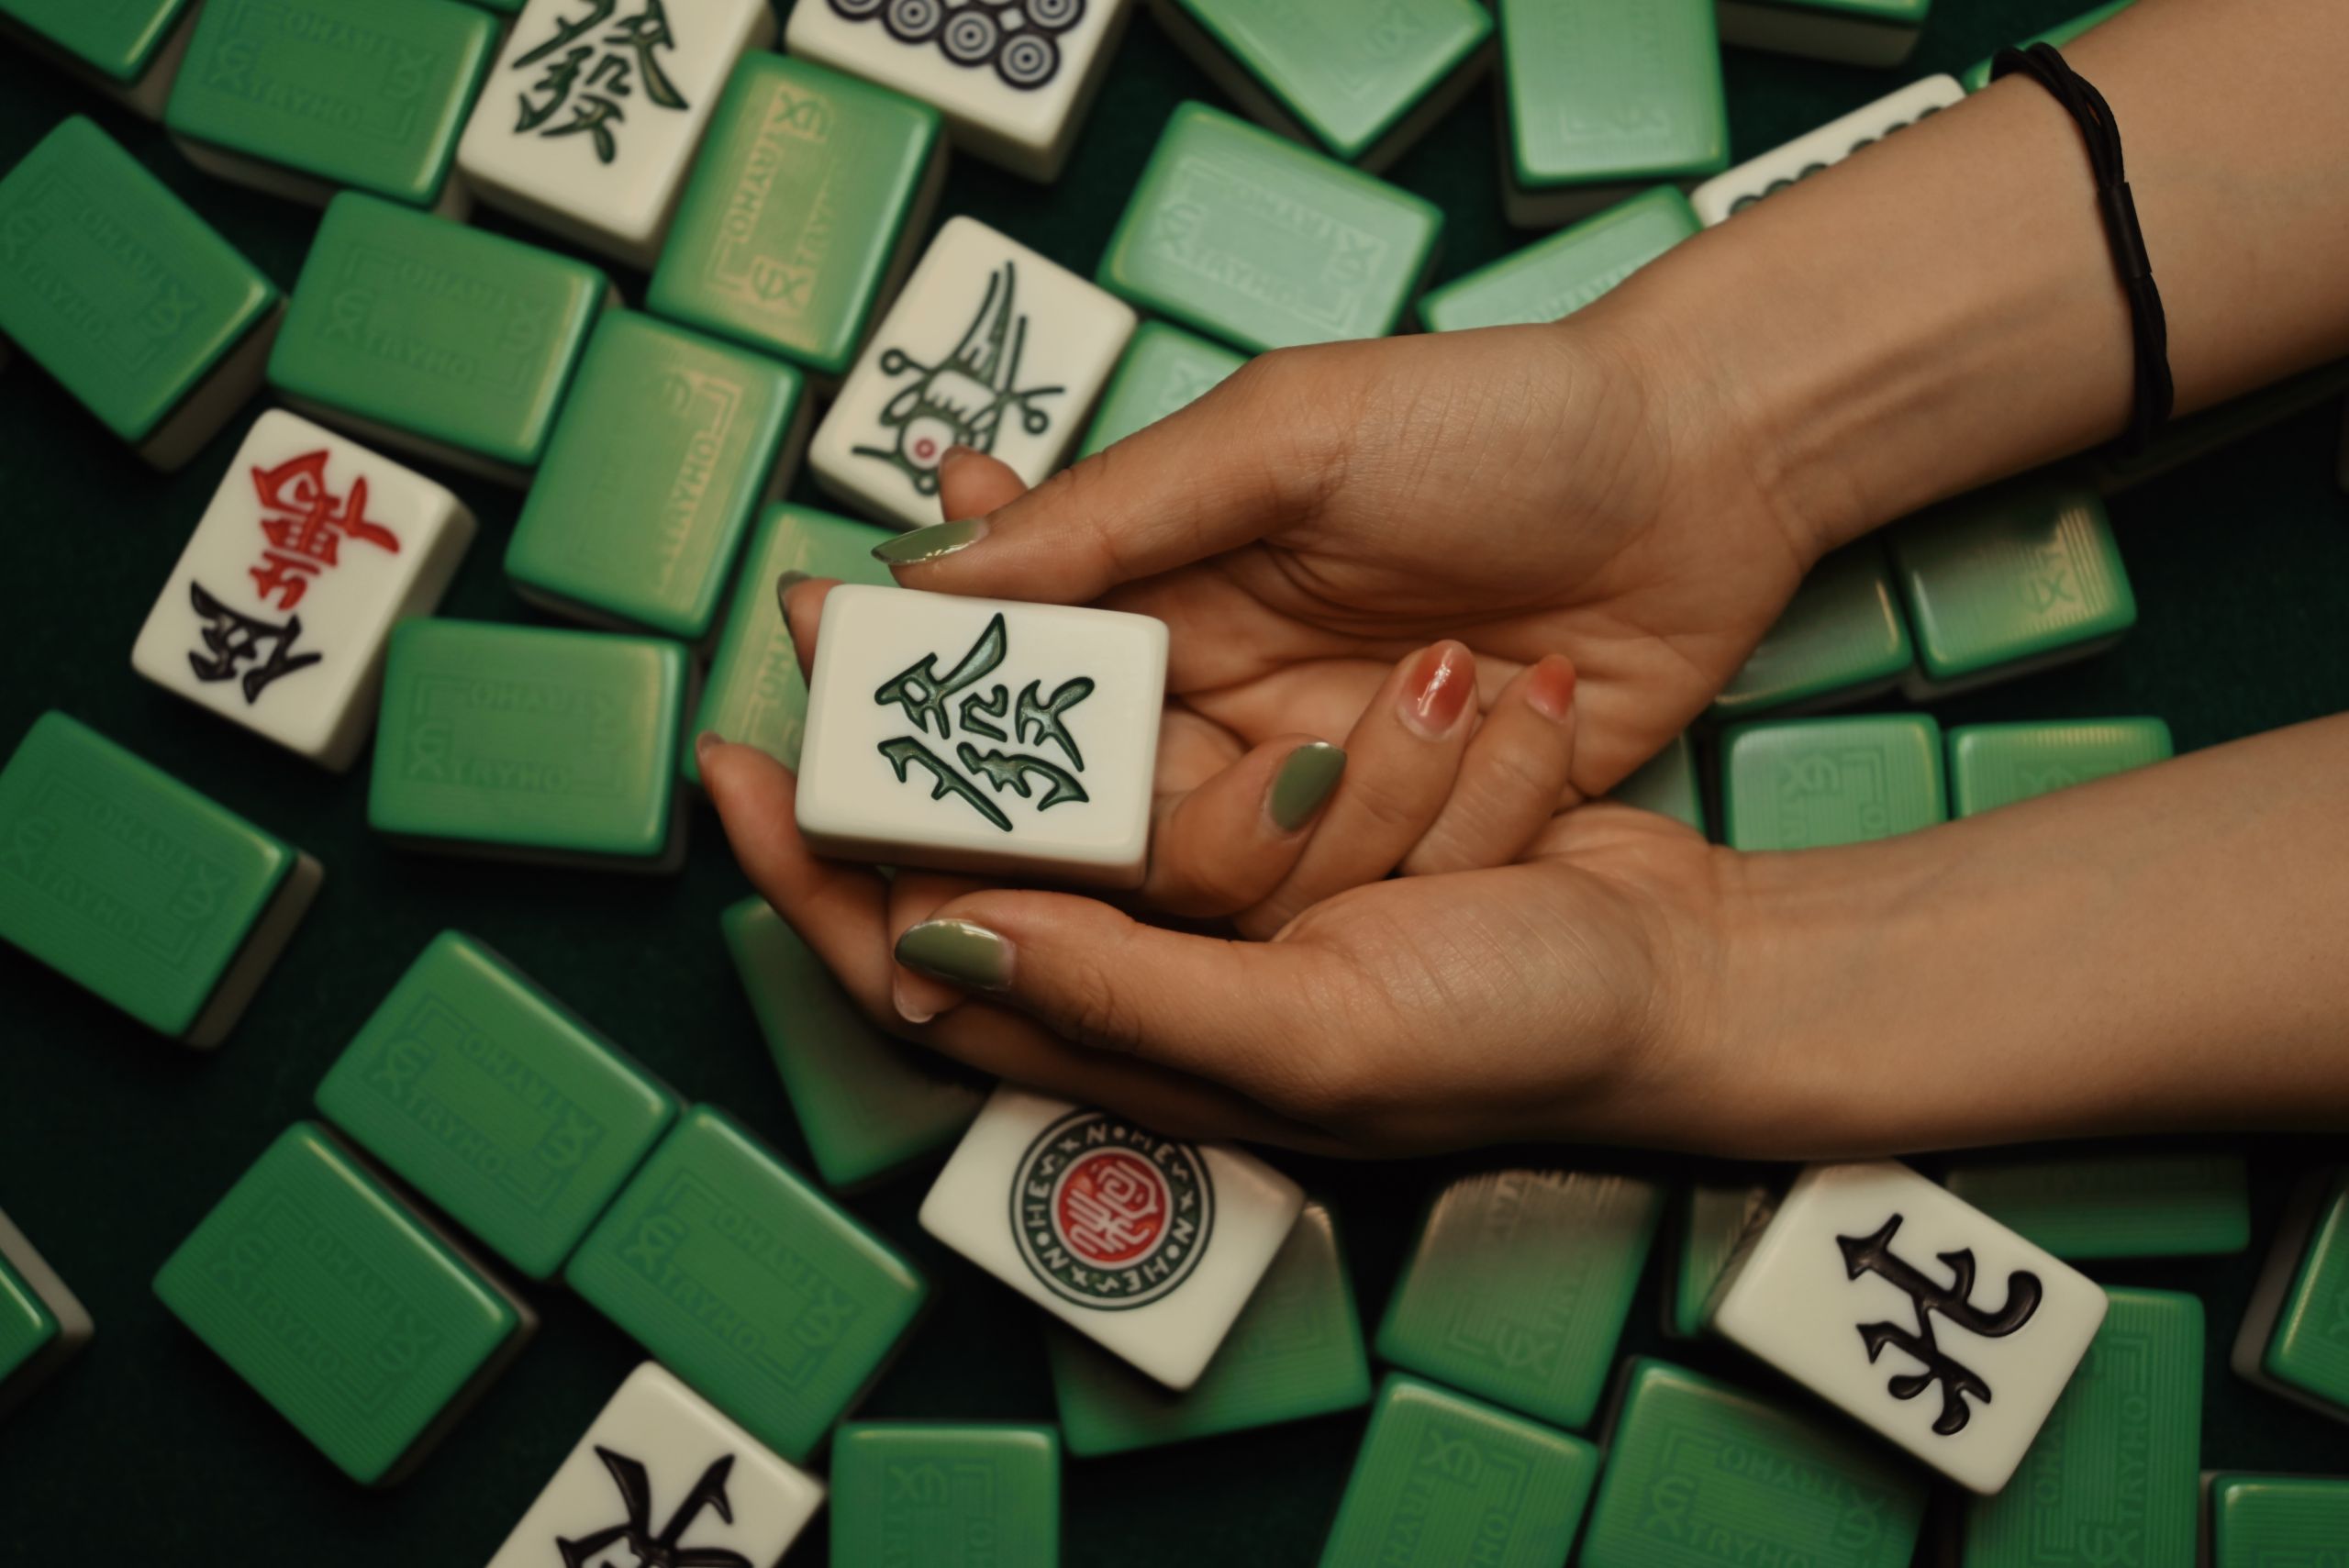 Mahjong Tiles - White with Blue Back - Set of 166 + 2 Black Trays